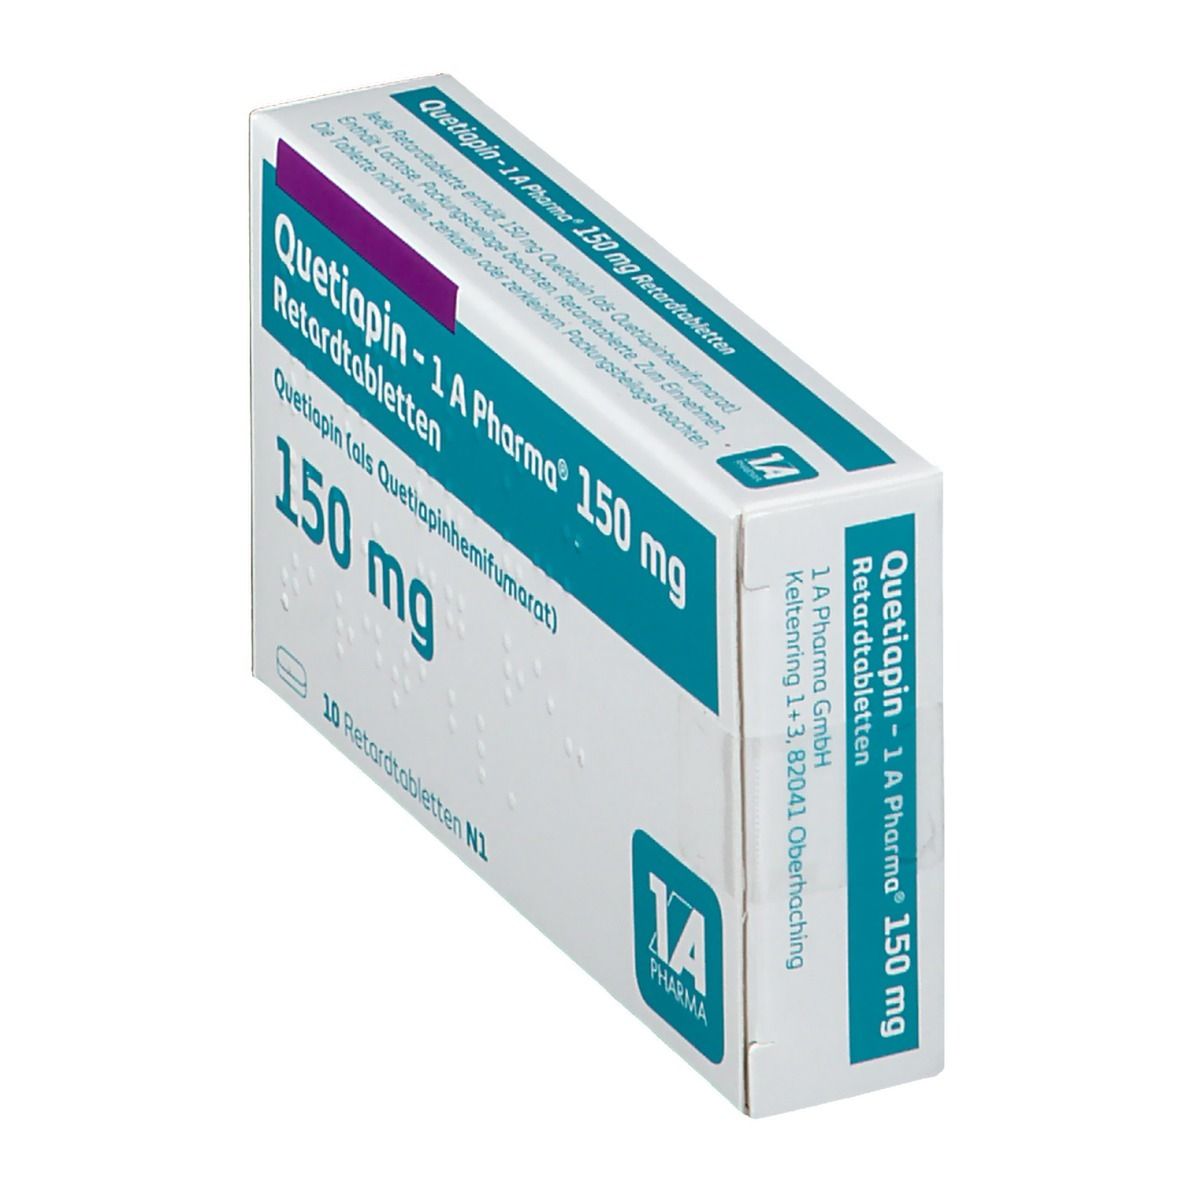 Quetiapin - 1 A Pharma® 150 mg